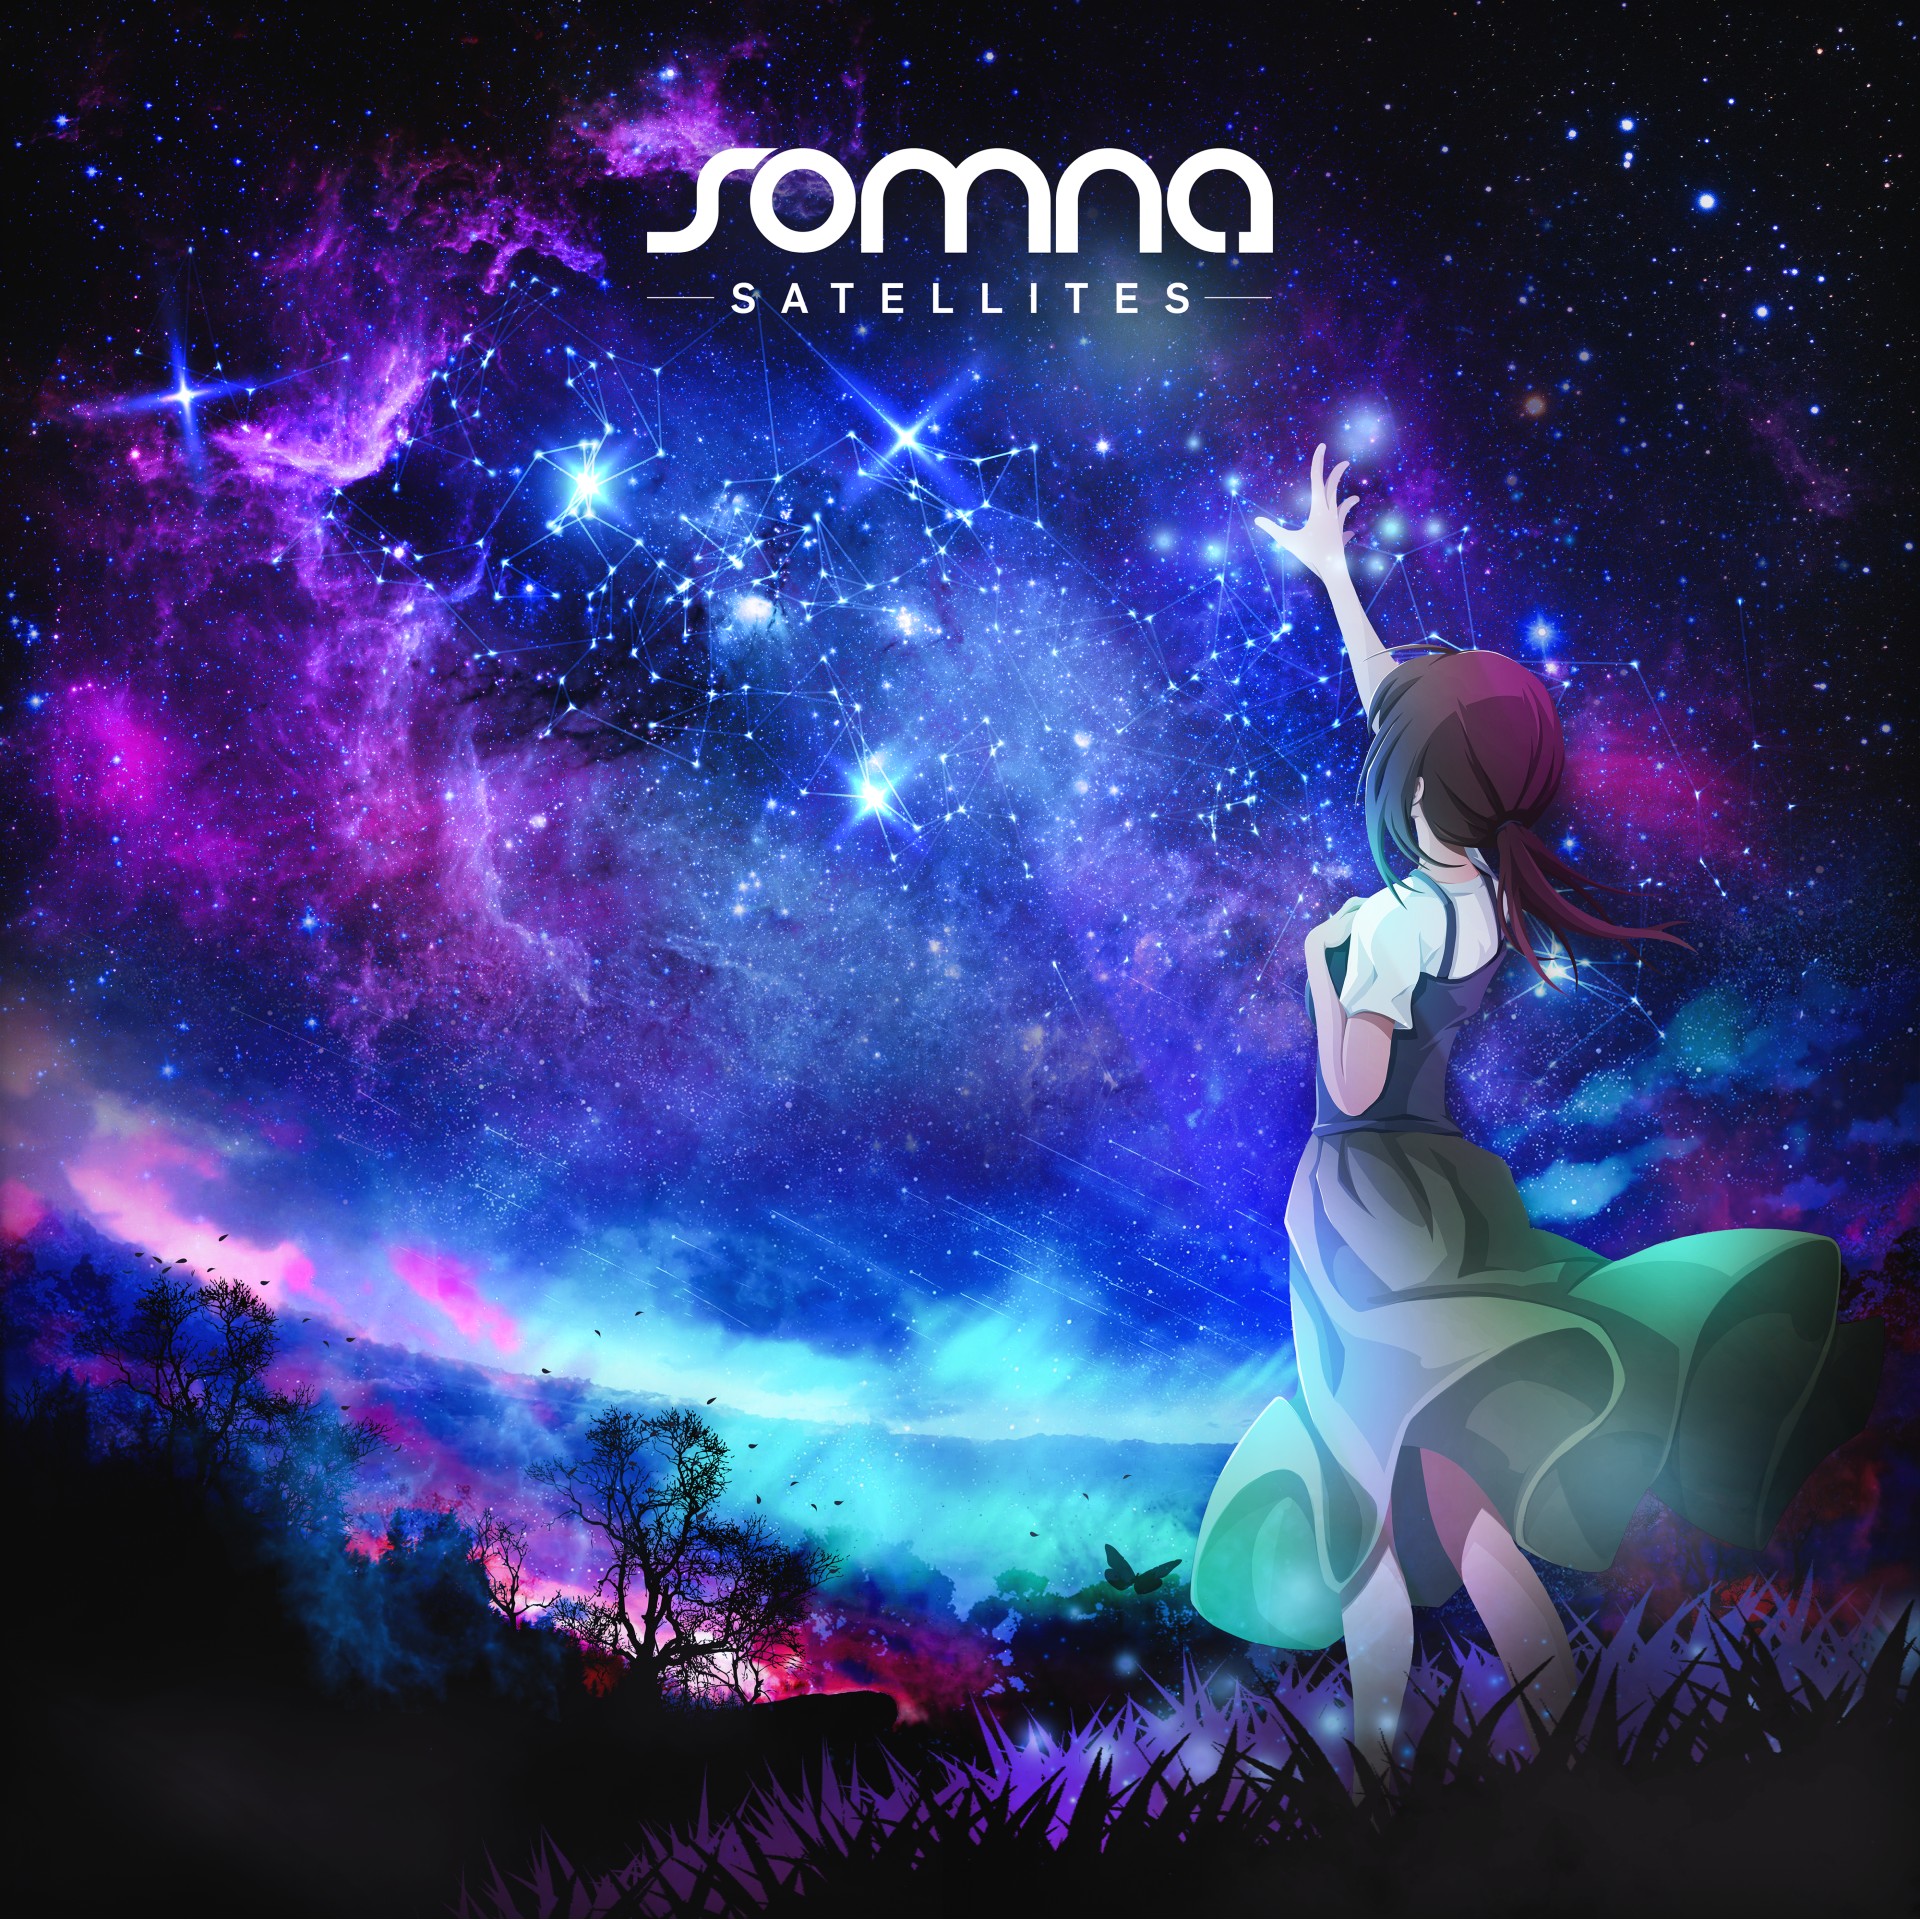 Somna drops euphoric new album – ‘Satellites’